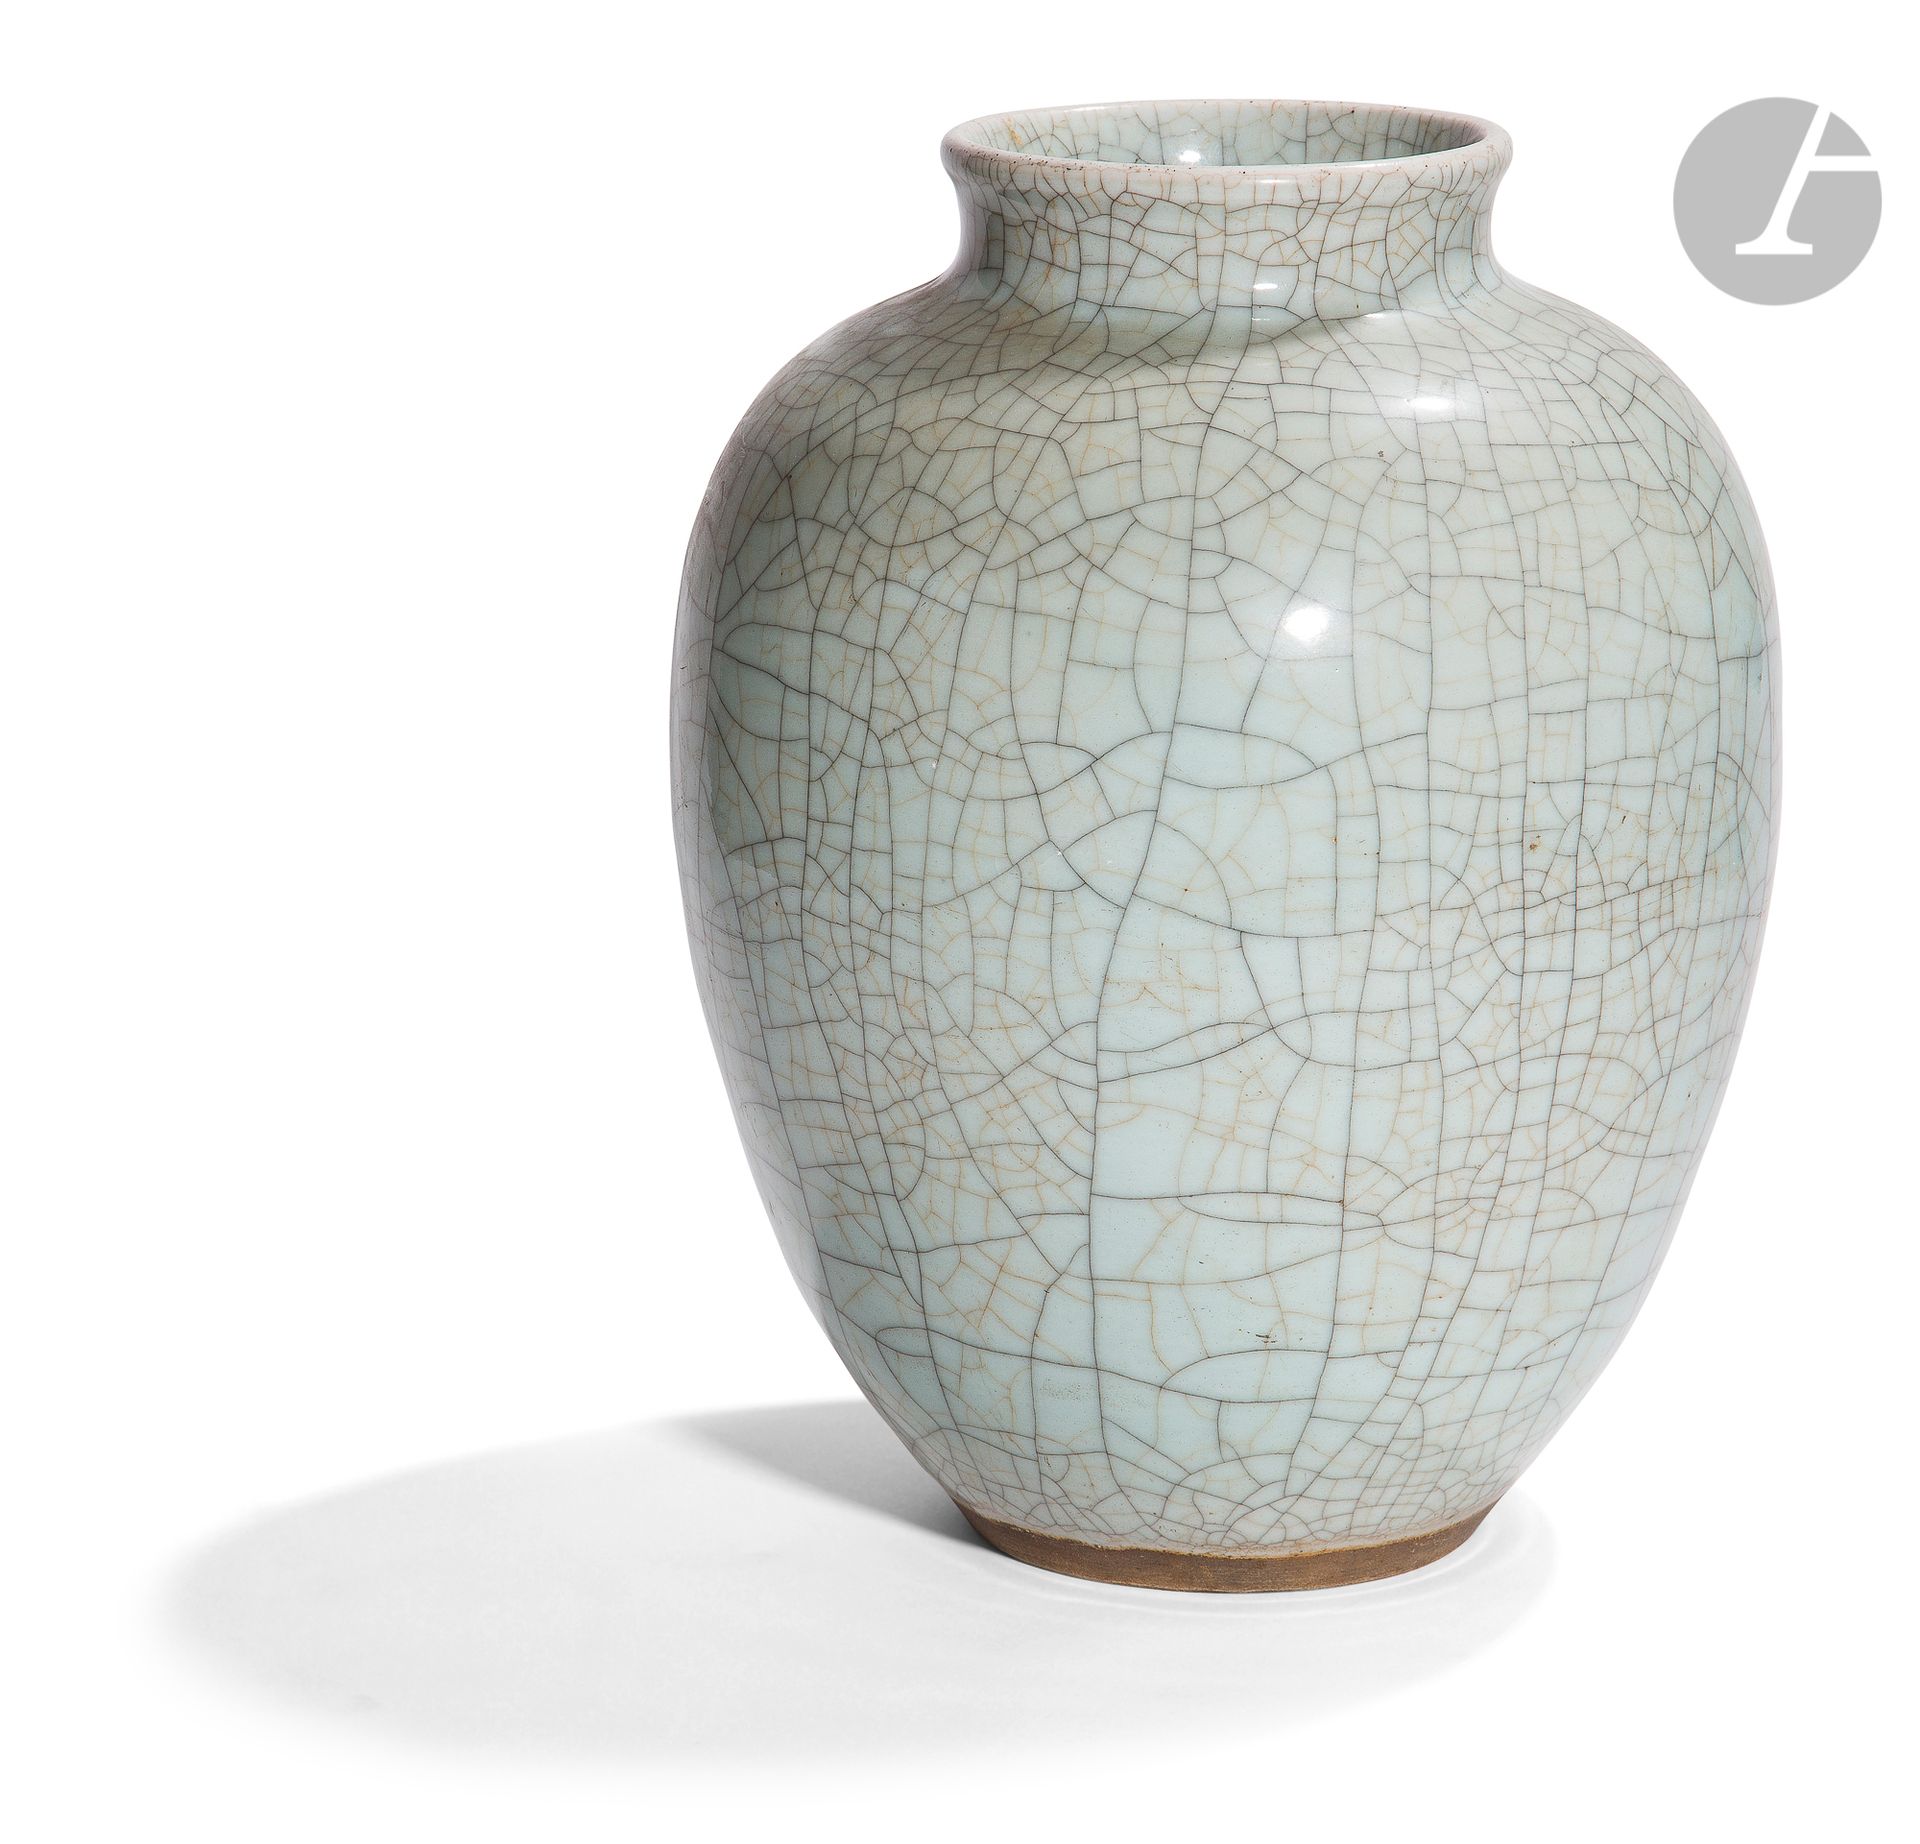 Null A
shiliuzun
porcelain vase with a cracked celadon
glaze
, China, 19th centu&hellip;